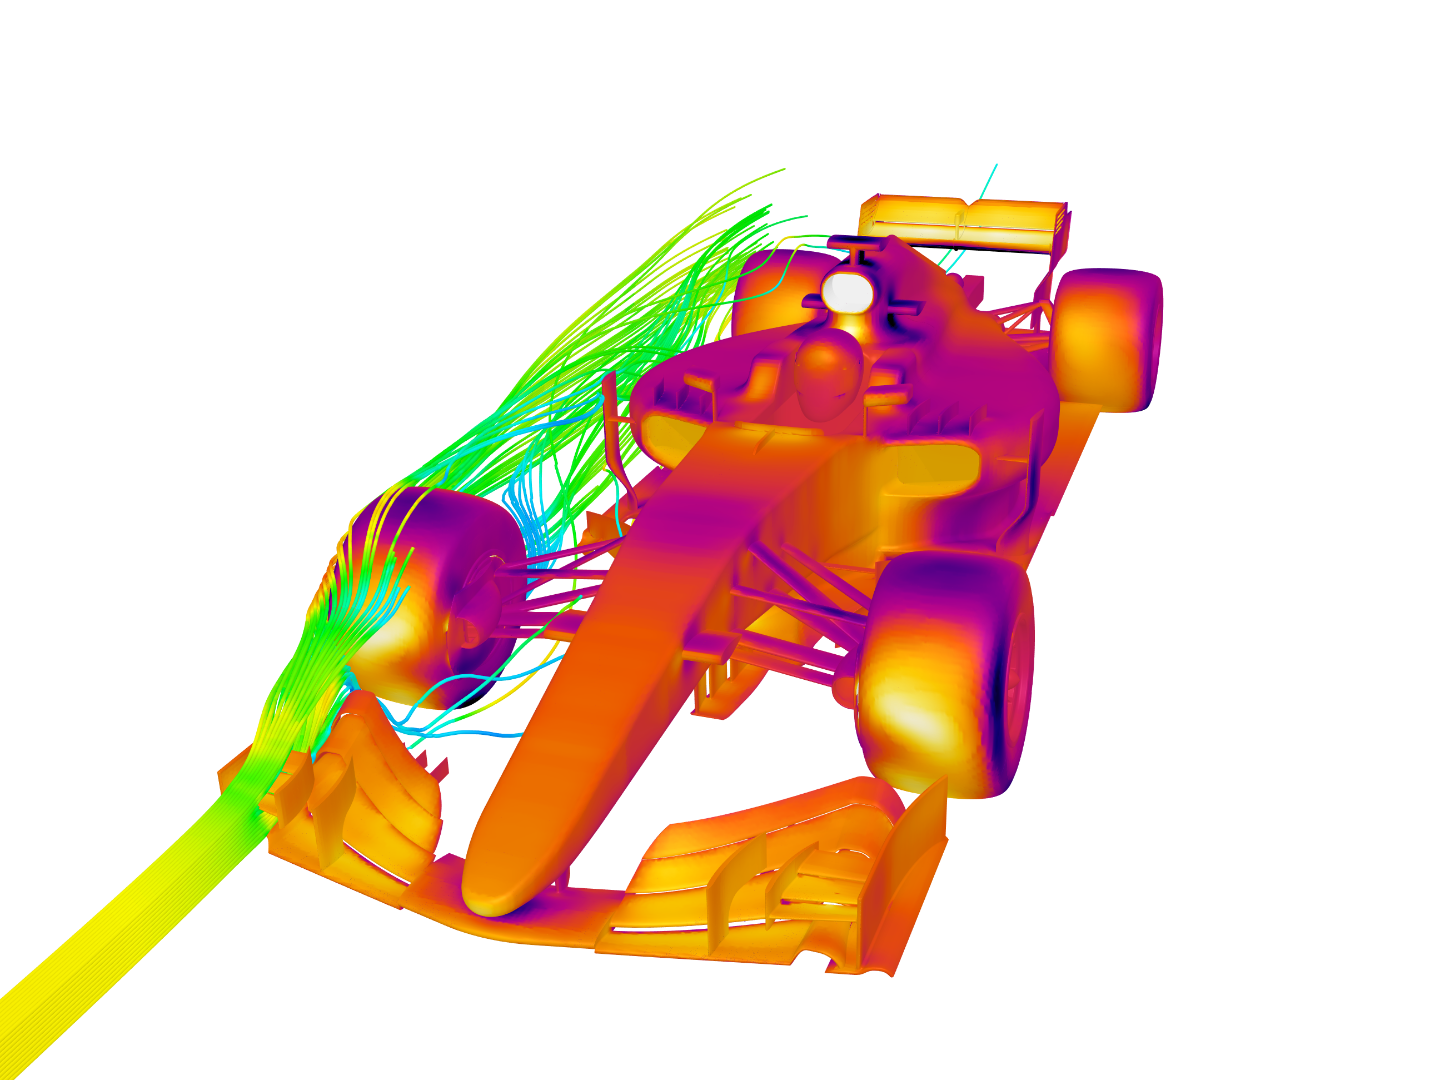 F1 Aerodynamics image